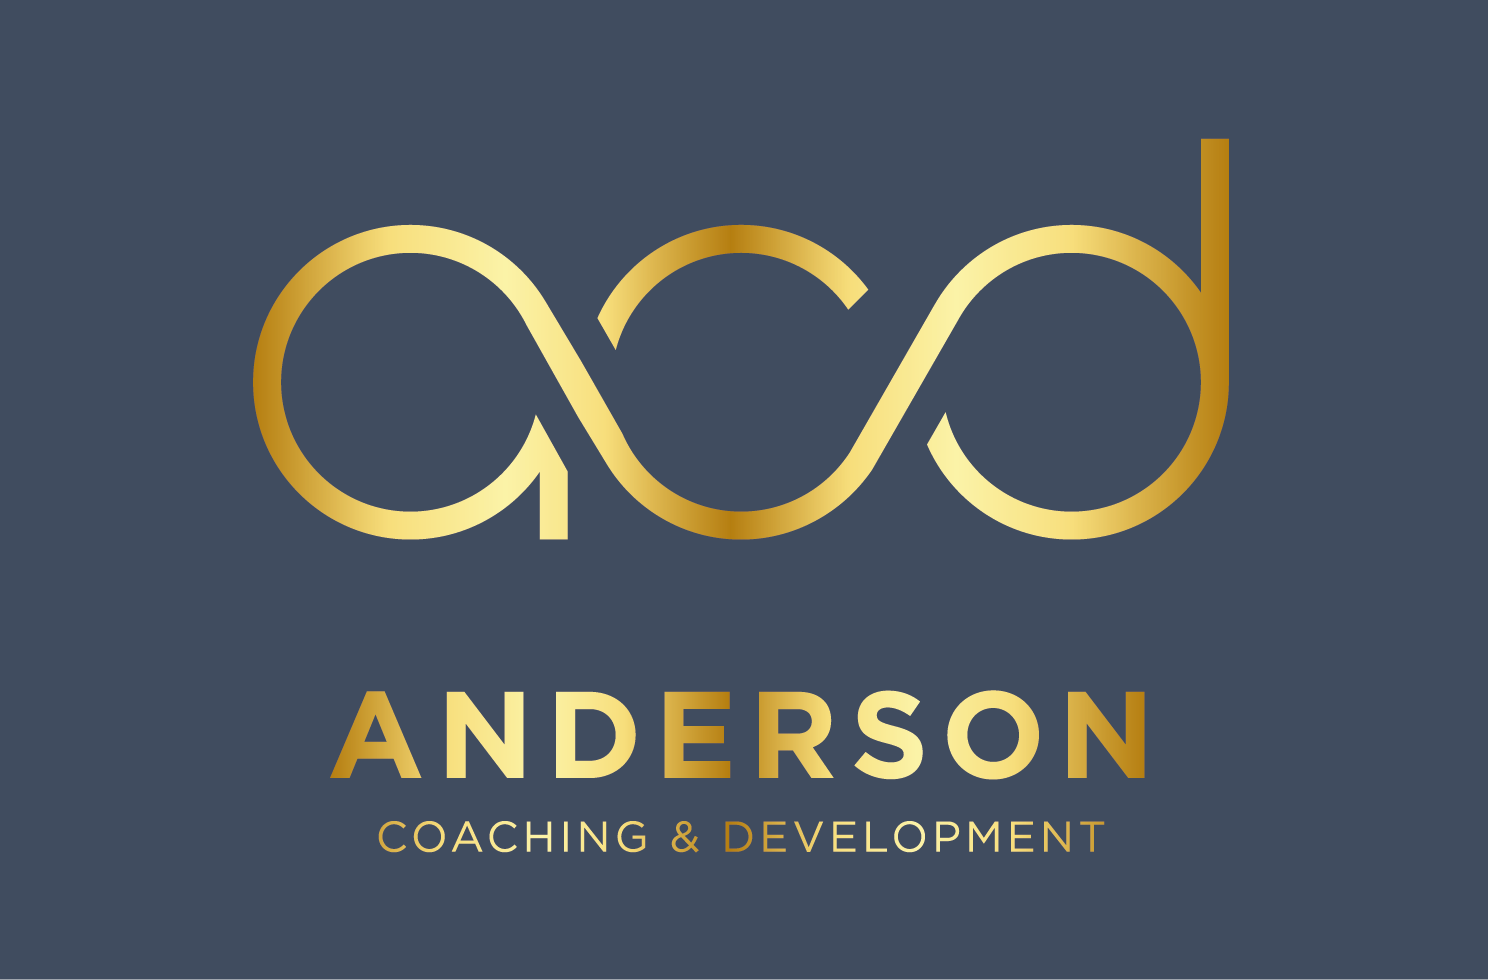 Anderson Coaching & Development